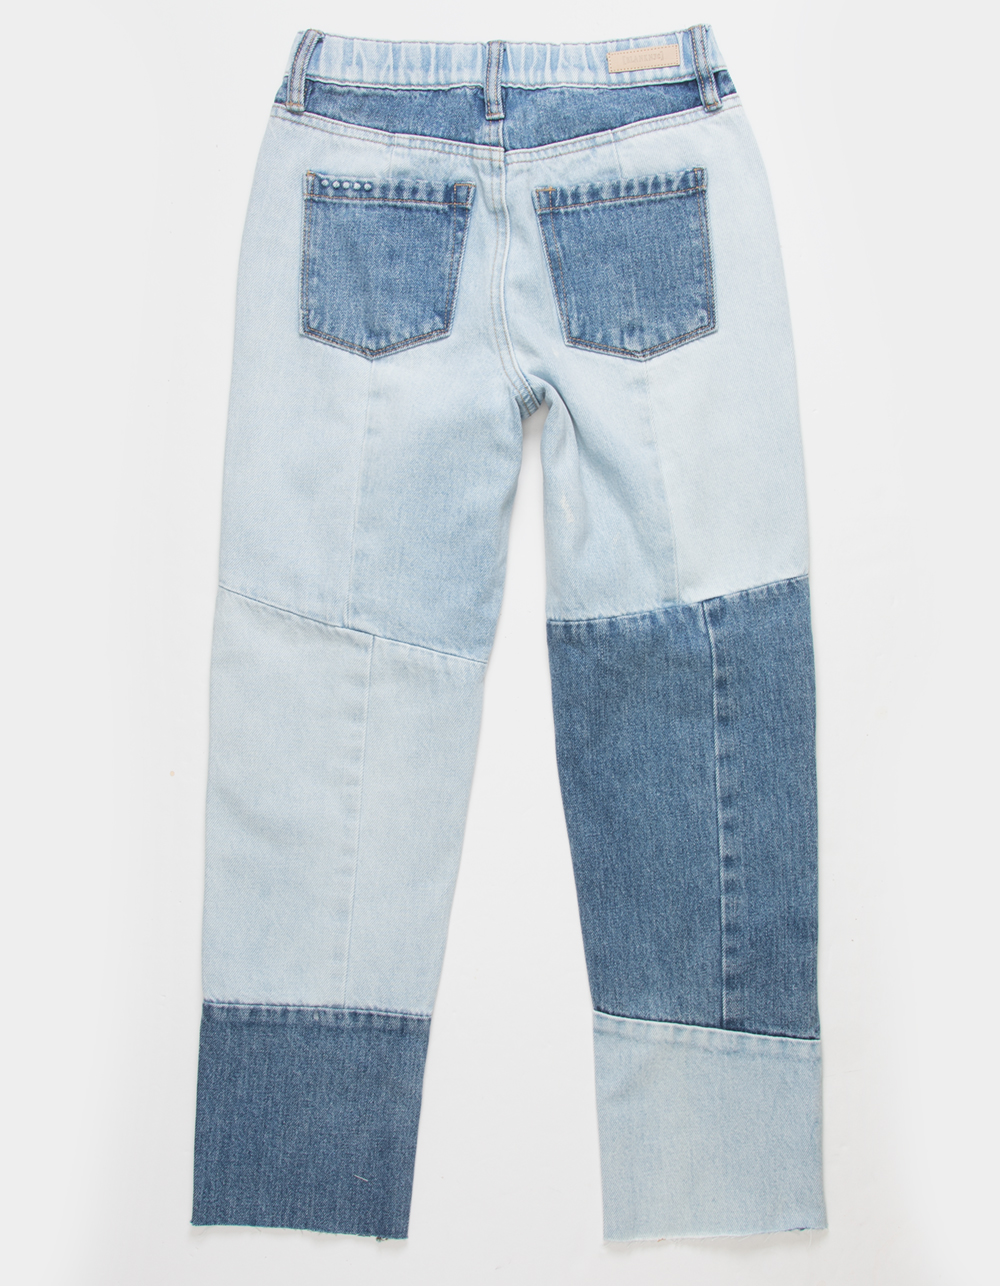 BLANK NYC Patchwork Girls Jeans - MEDIUM WASH | Tillys